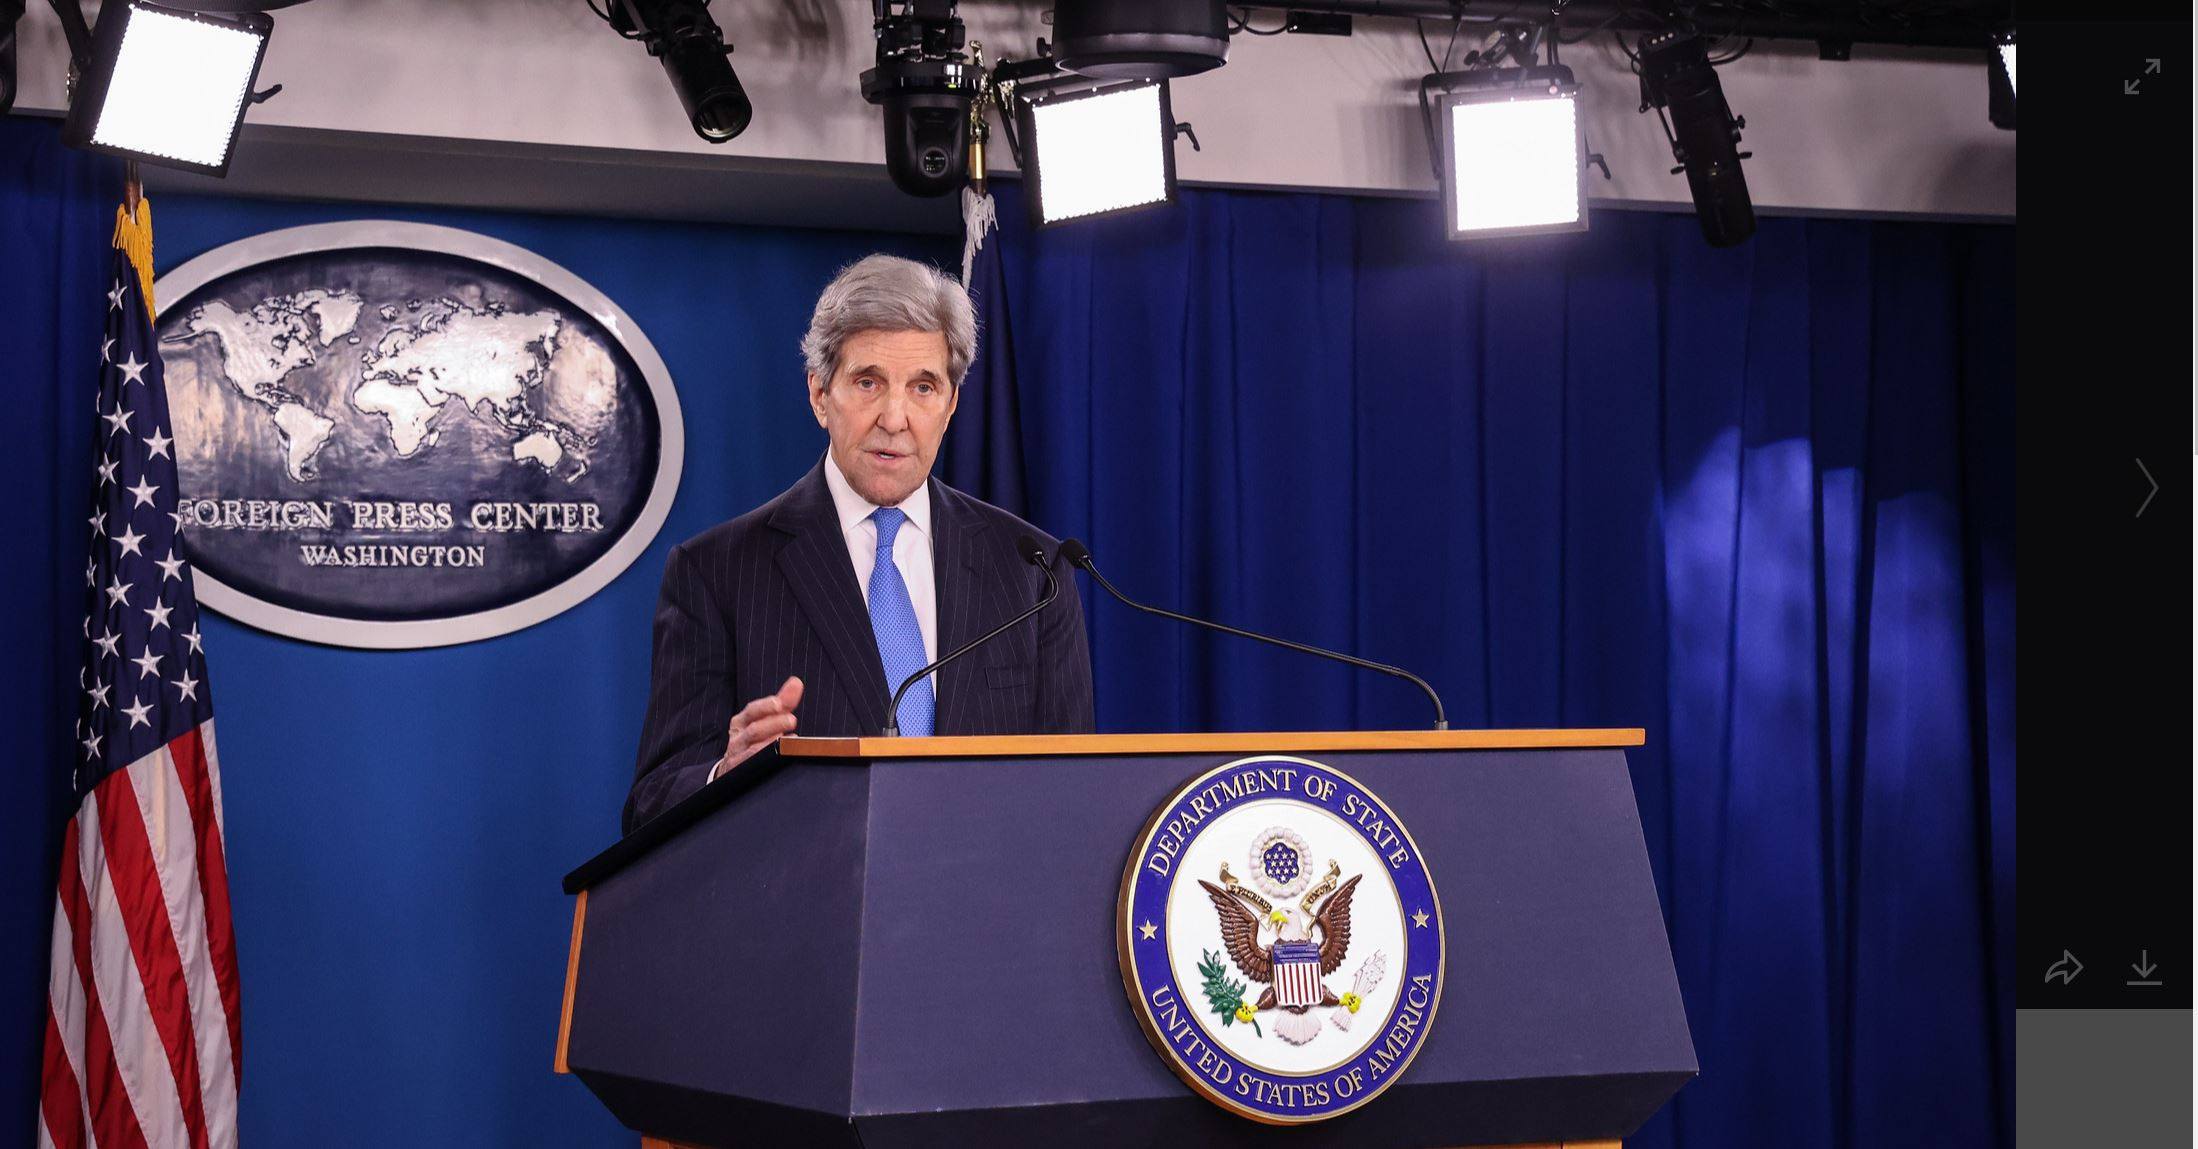 John Kerry, the outgoing US climate envoy, speaking in Washington on Tuesday. Photo: State Department Washington Foreign Press Center